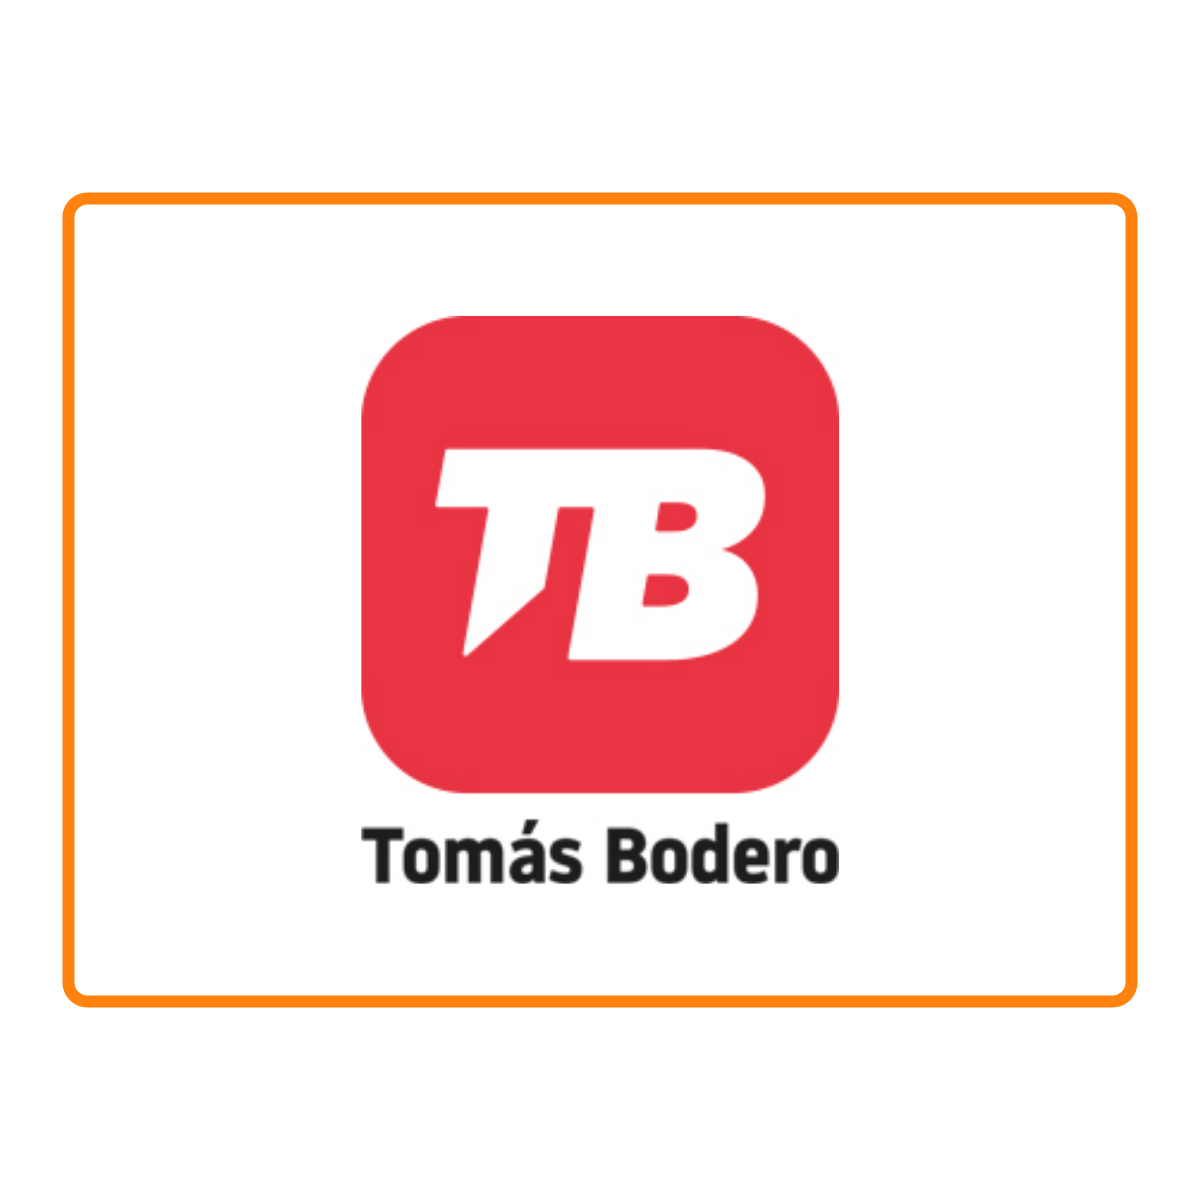 TOMAS BODERO